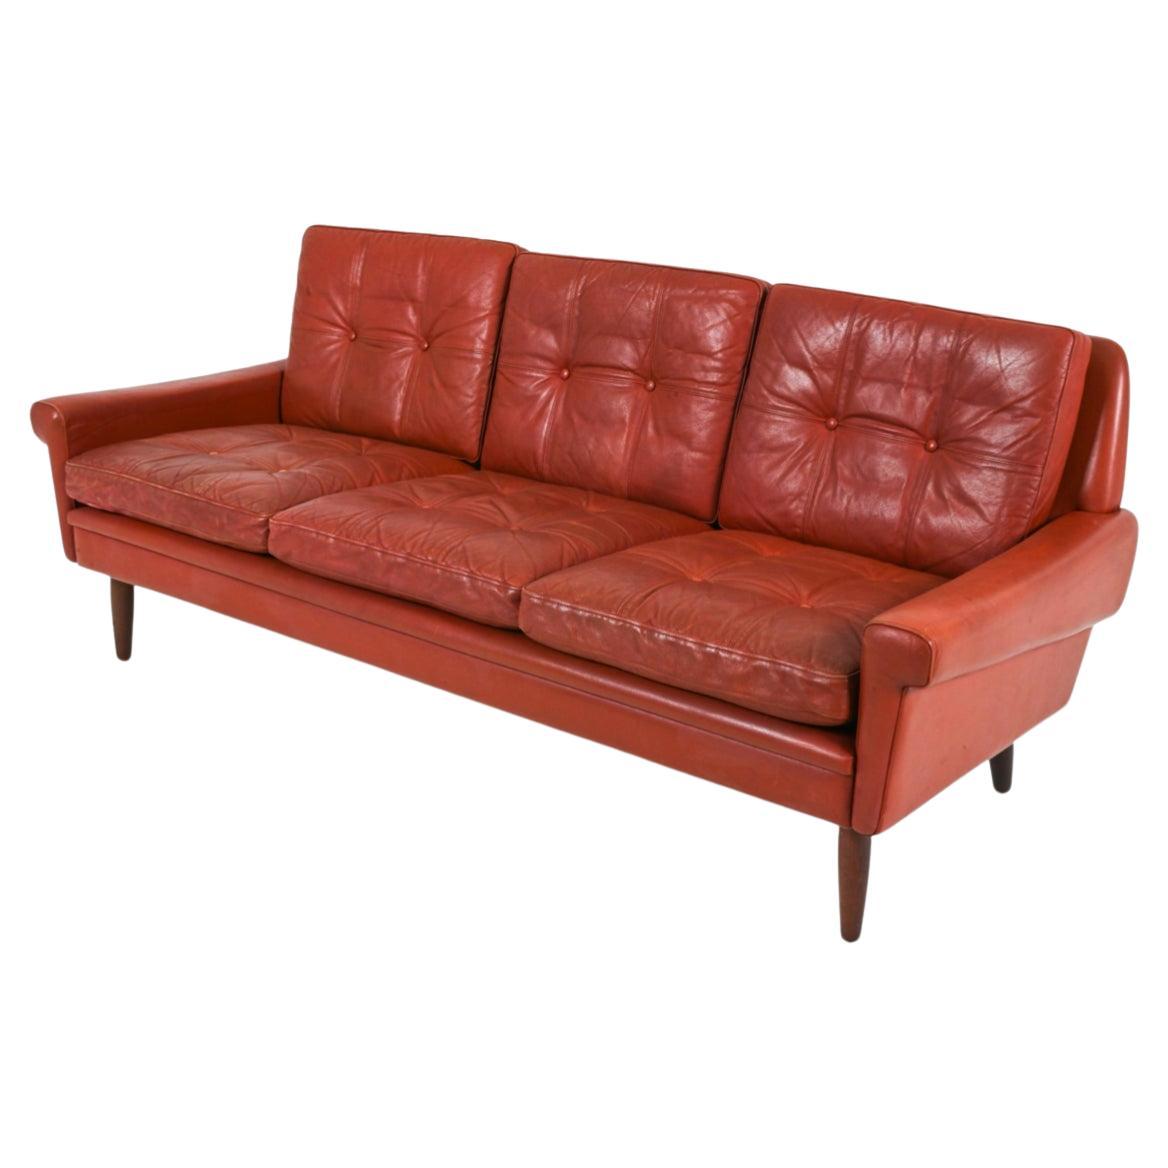 Scandinavian Modern Mid century Danish modern red leather 3 seat sofa For Sale